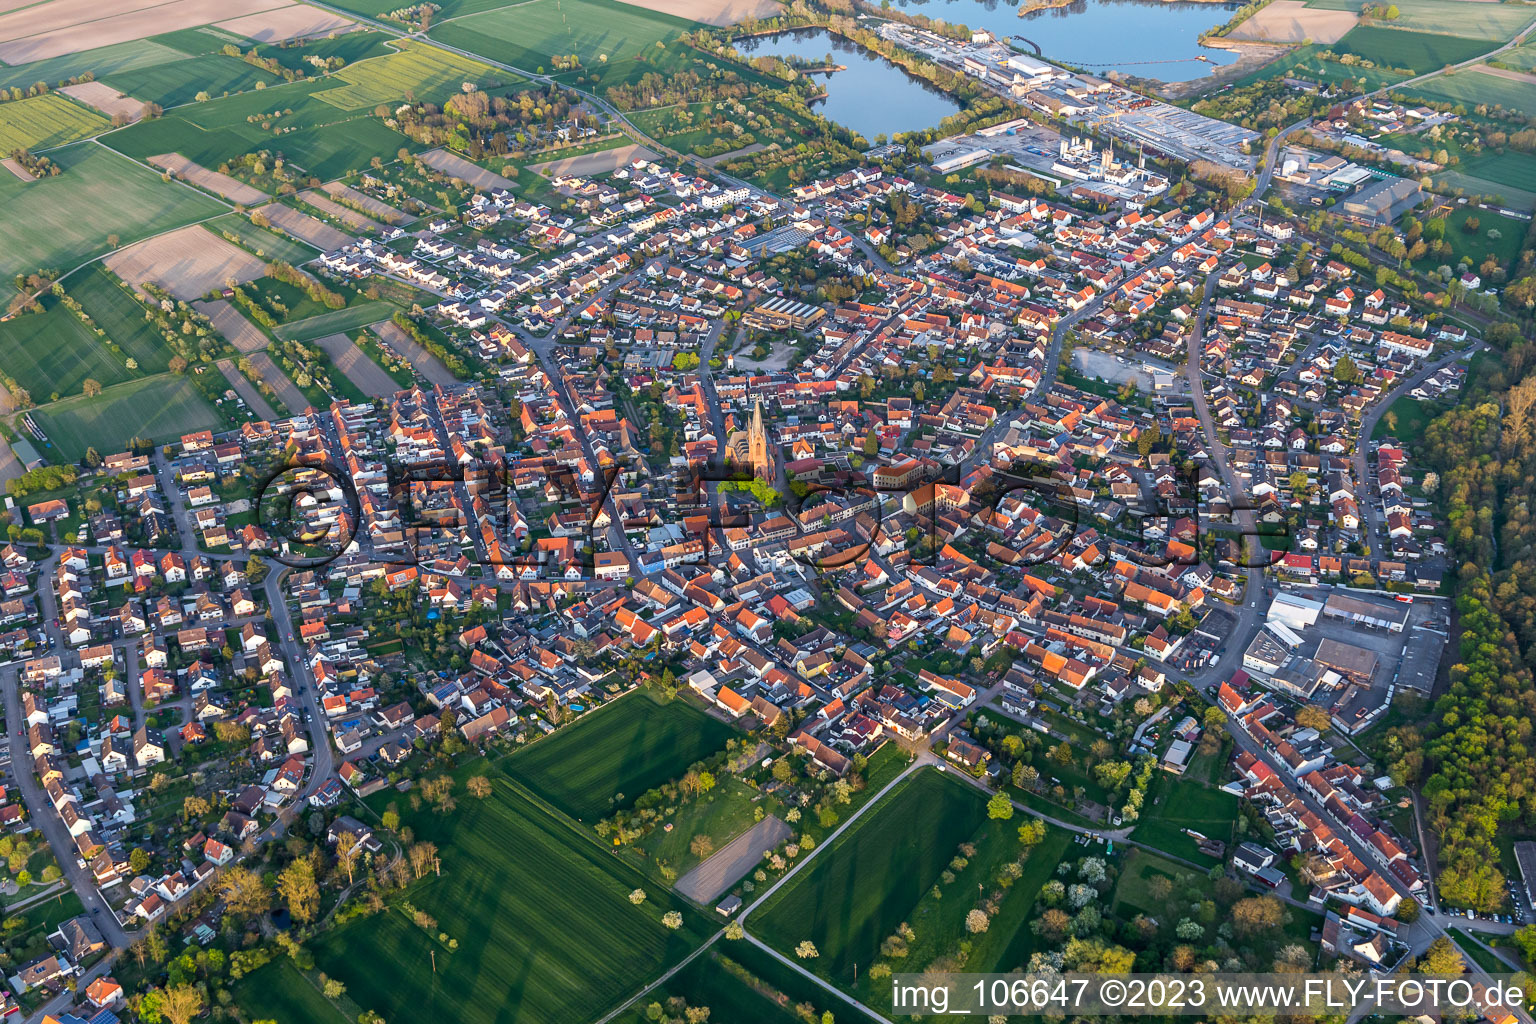 Quartier Rheinsheim in Philippsburg dans le département Bade-Wurtemberg, Allemagne vue d'en haut